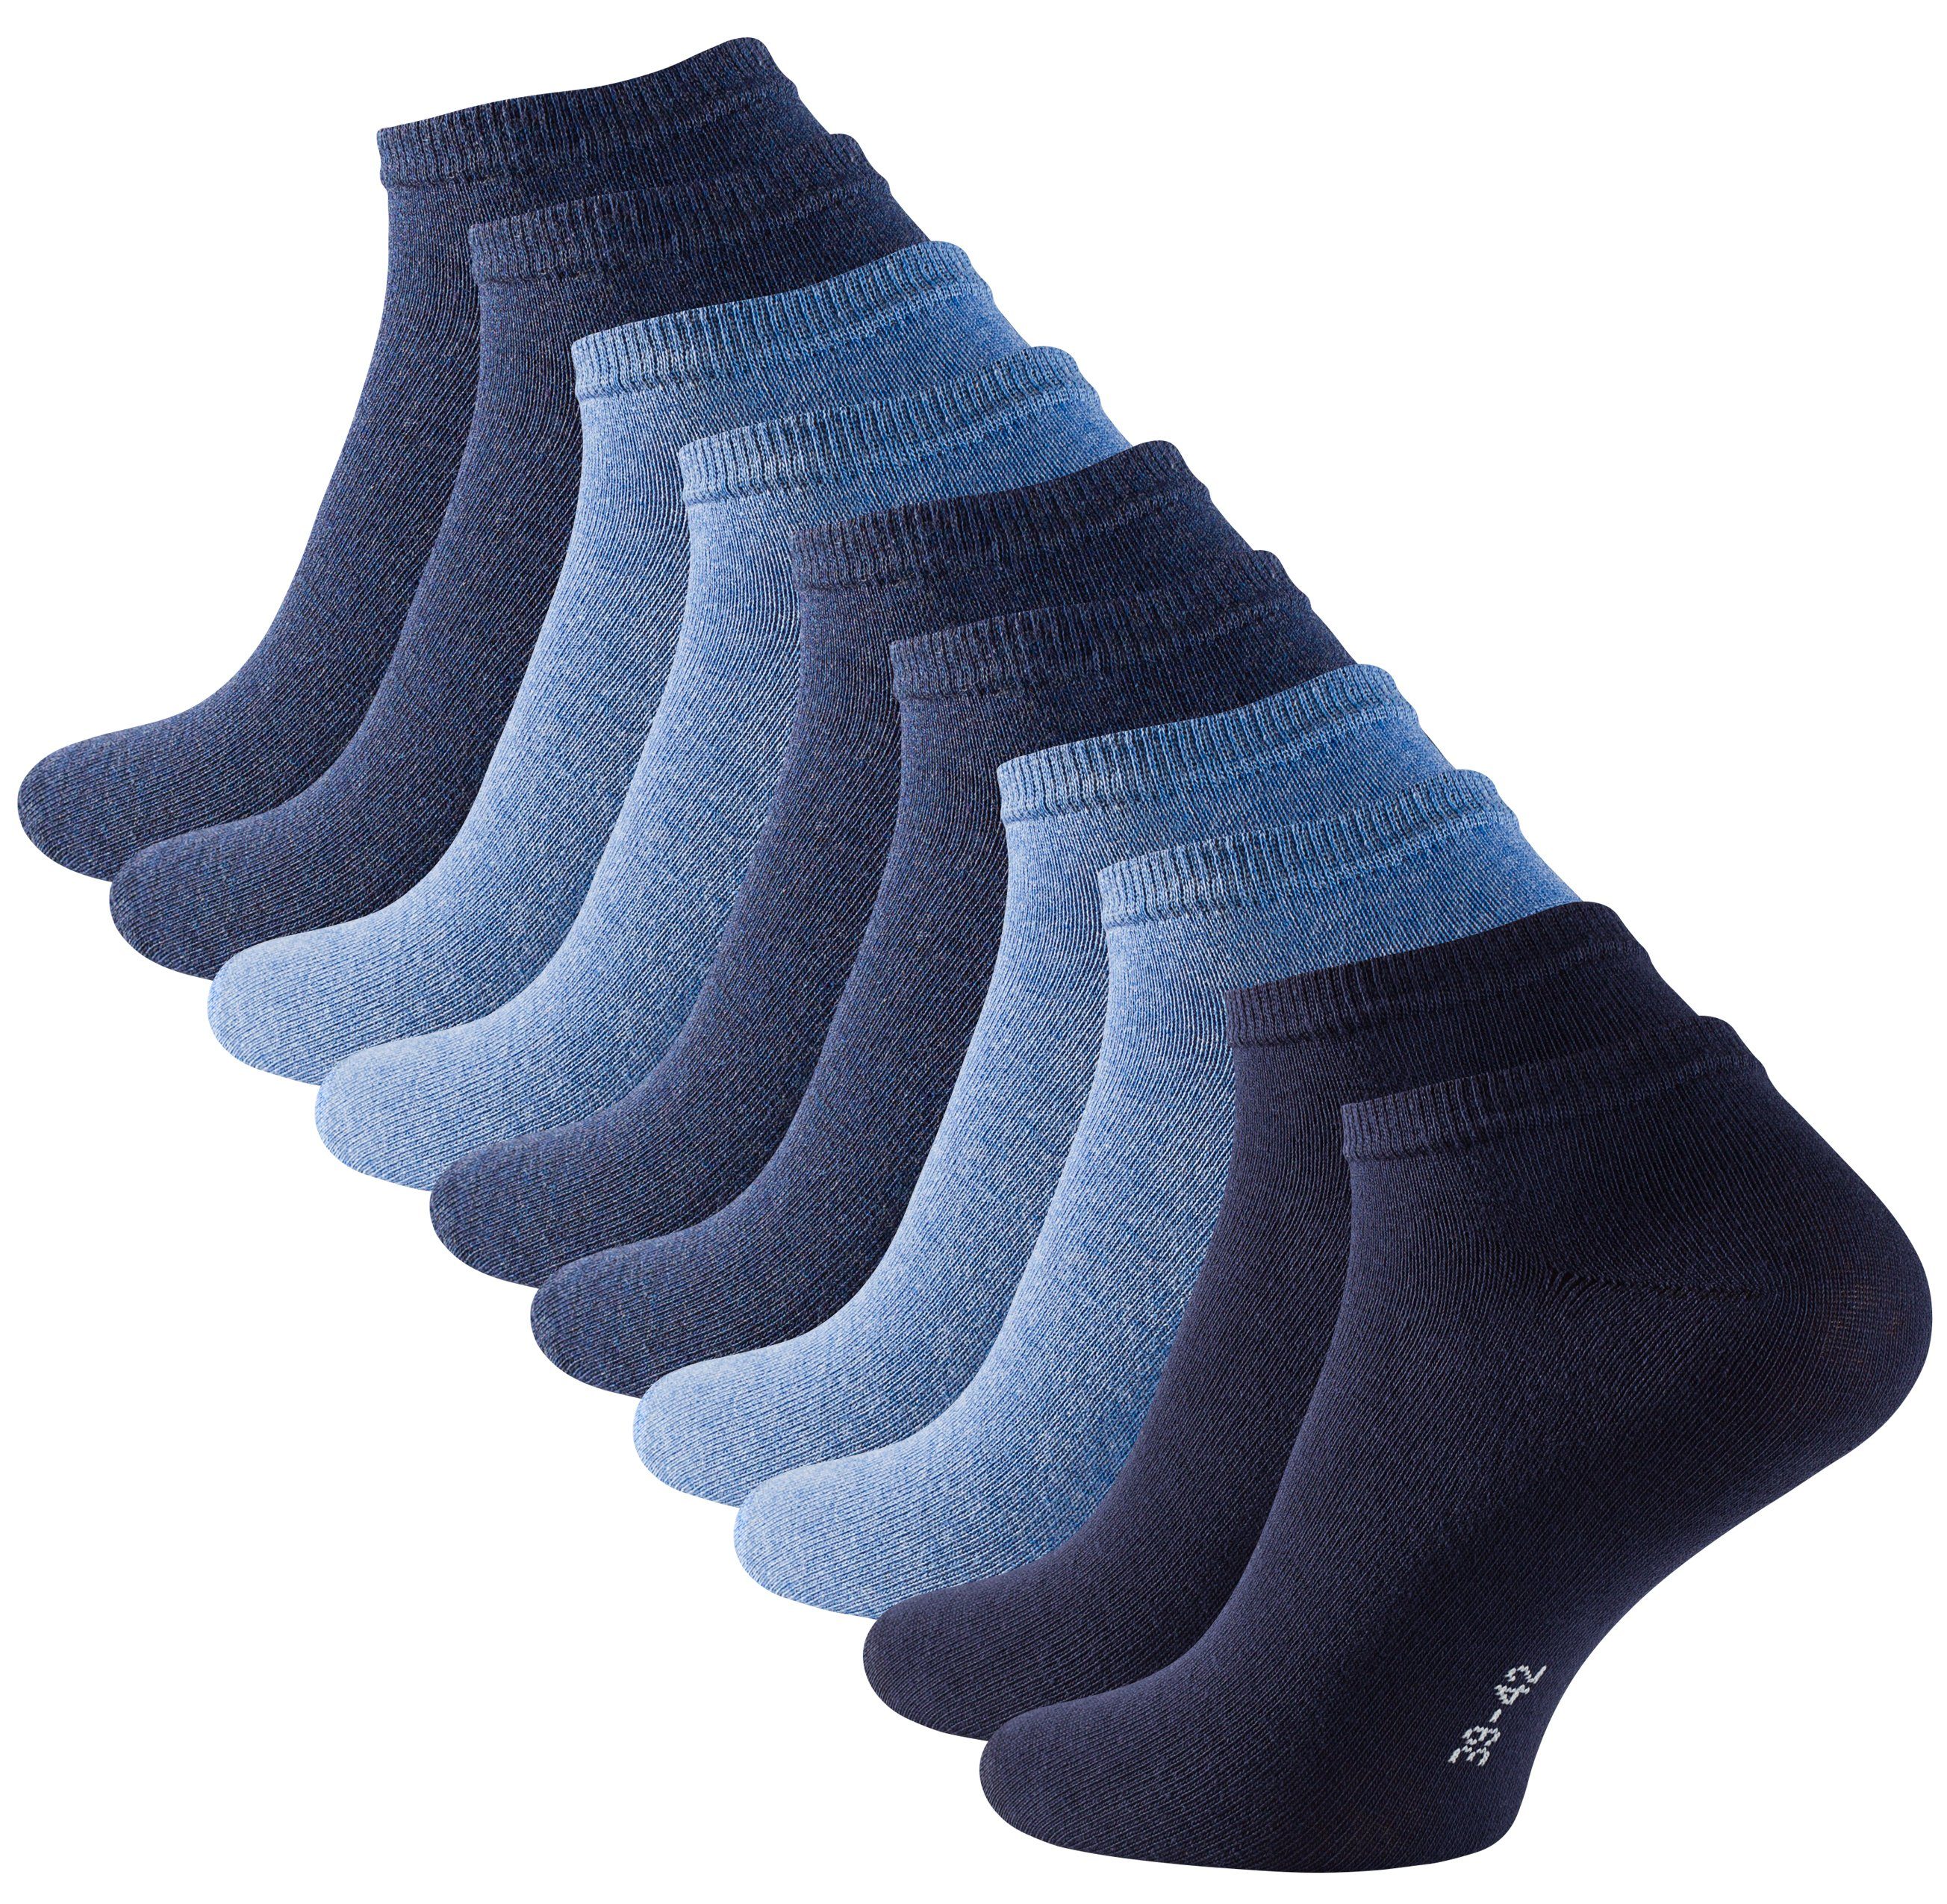 Stark Soul® Sneakersocken 10 Paar (10-Paar) in angenehmer Baumwollqualität Blautöne-Mix